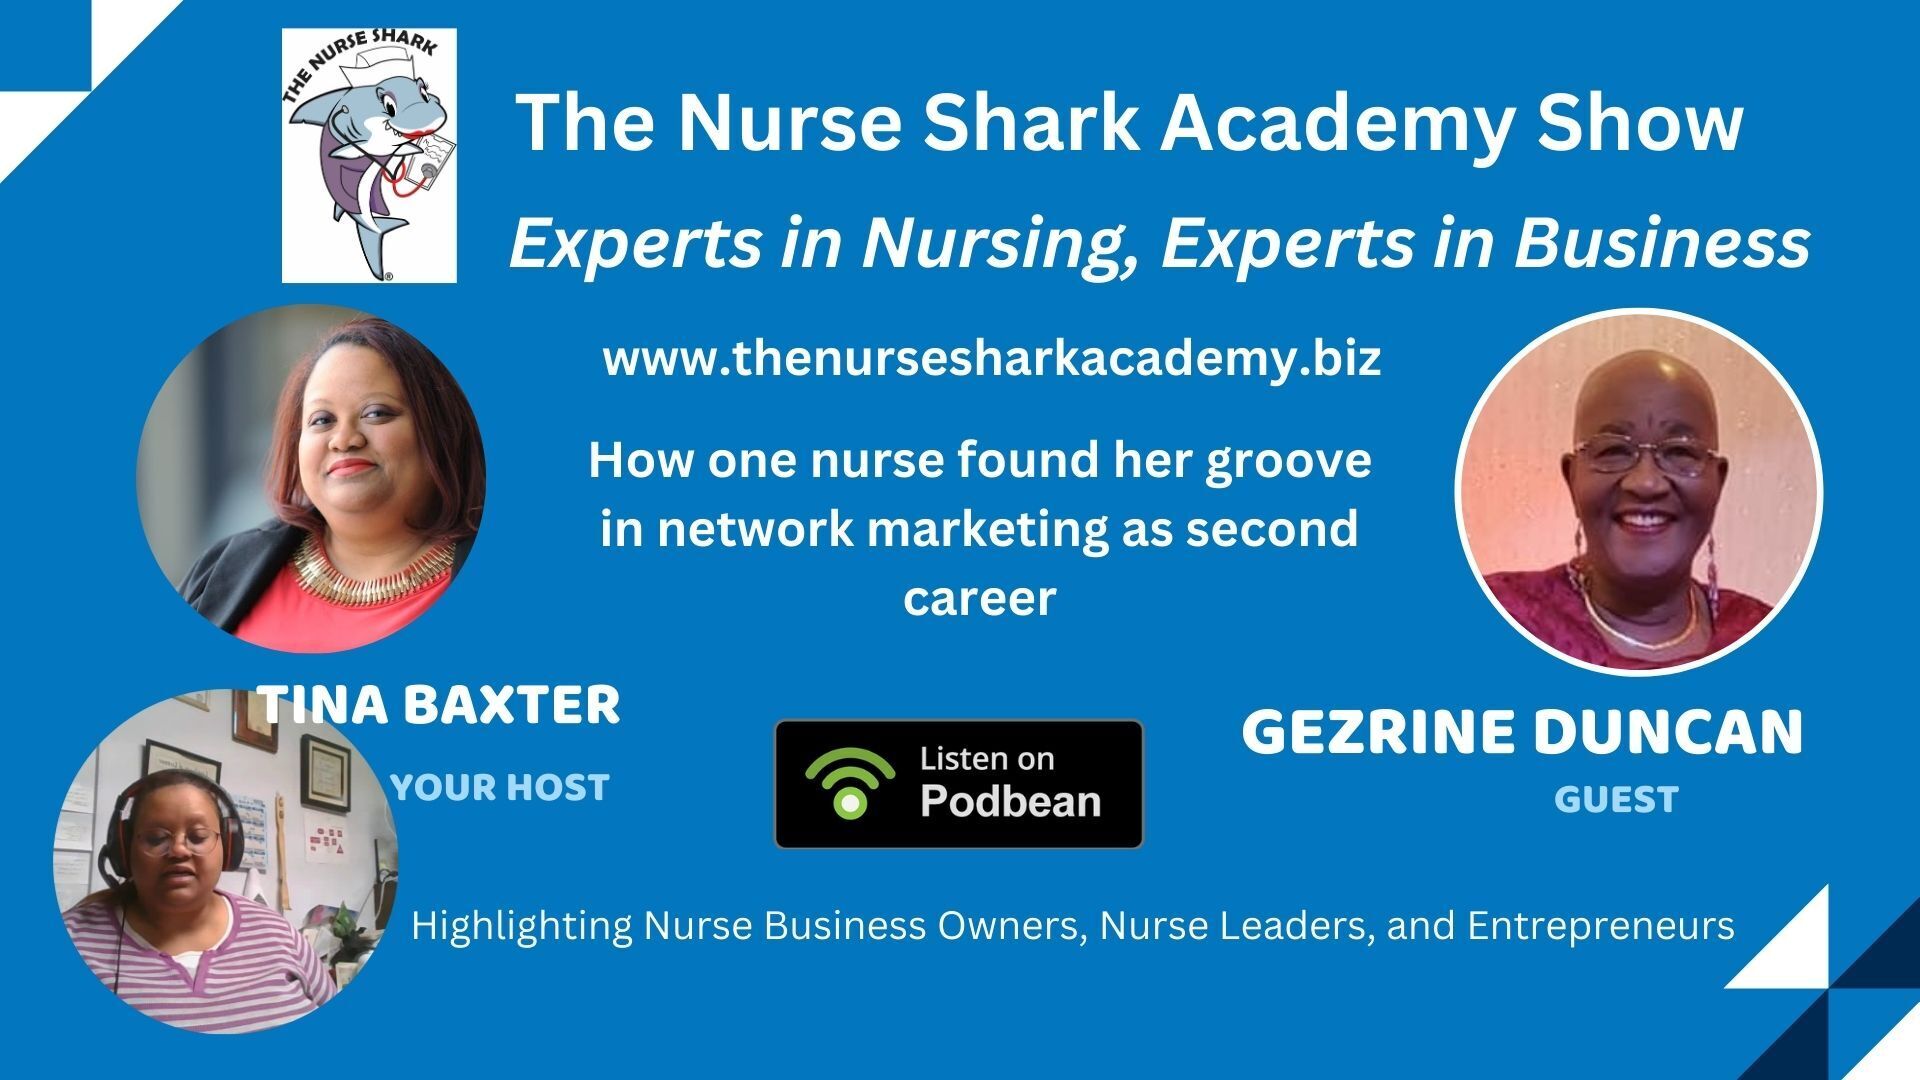 The_Nurse_Shark_Show_Gezrine_Duncan_promo7lv9...